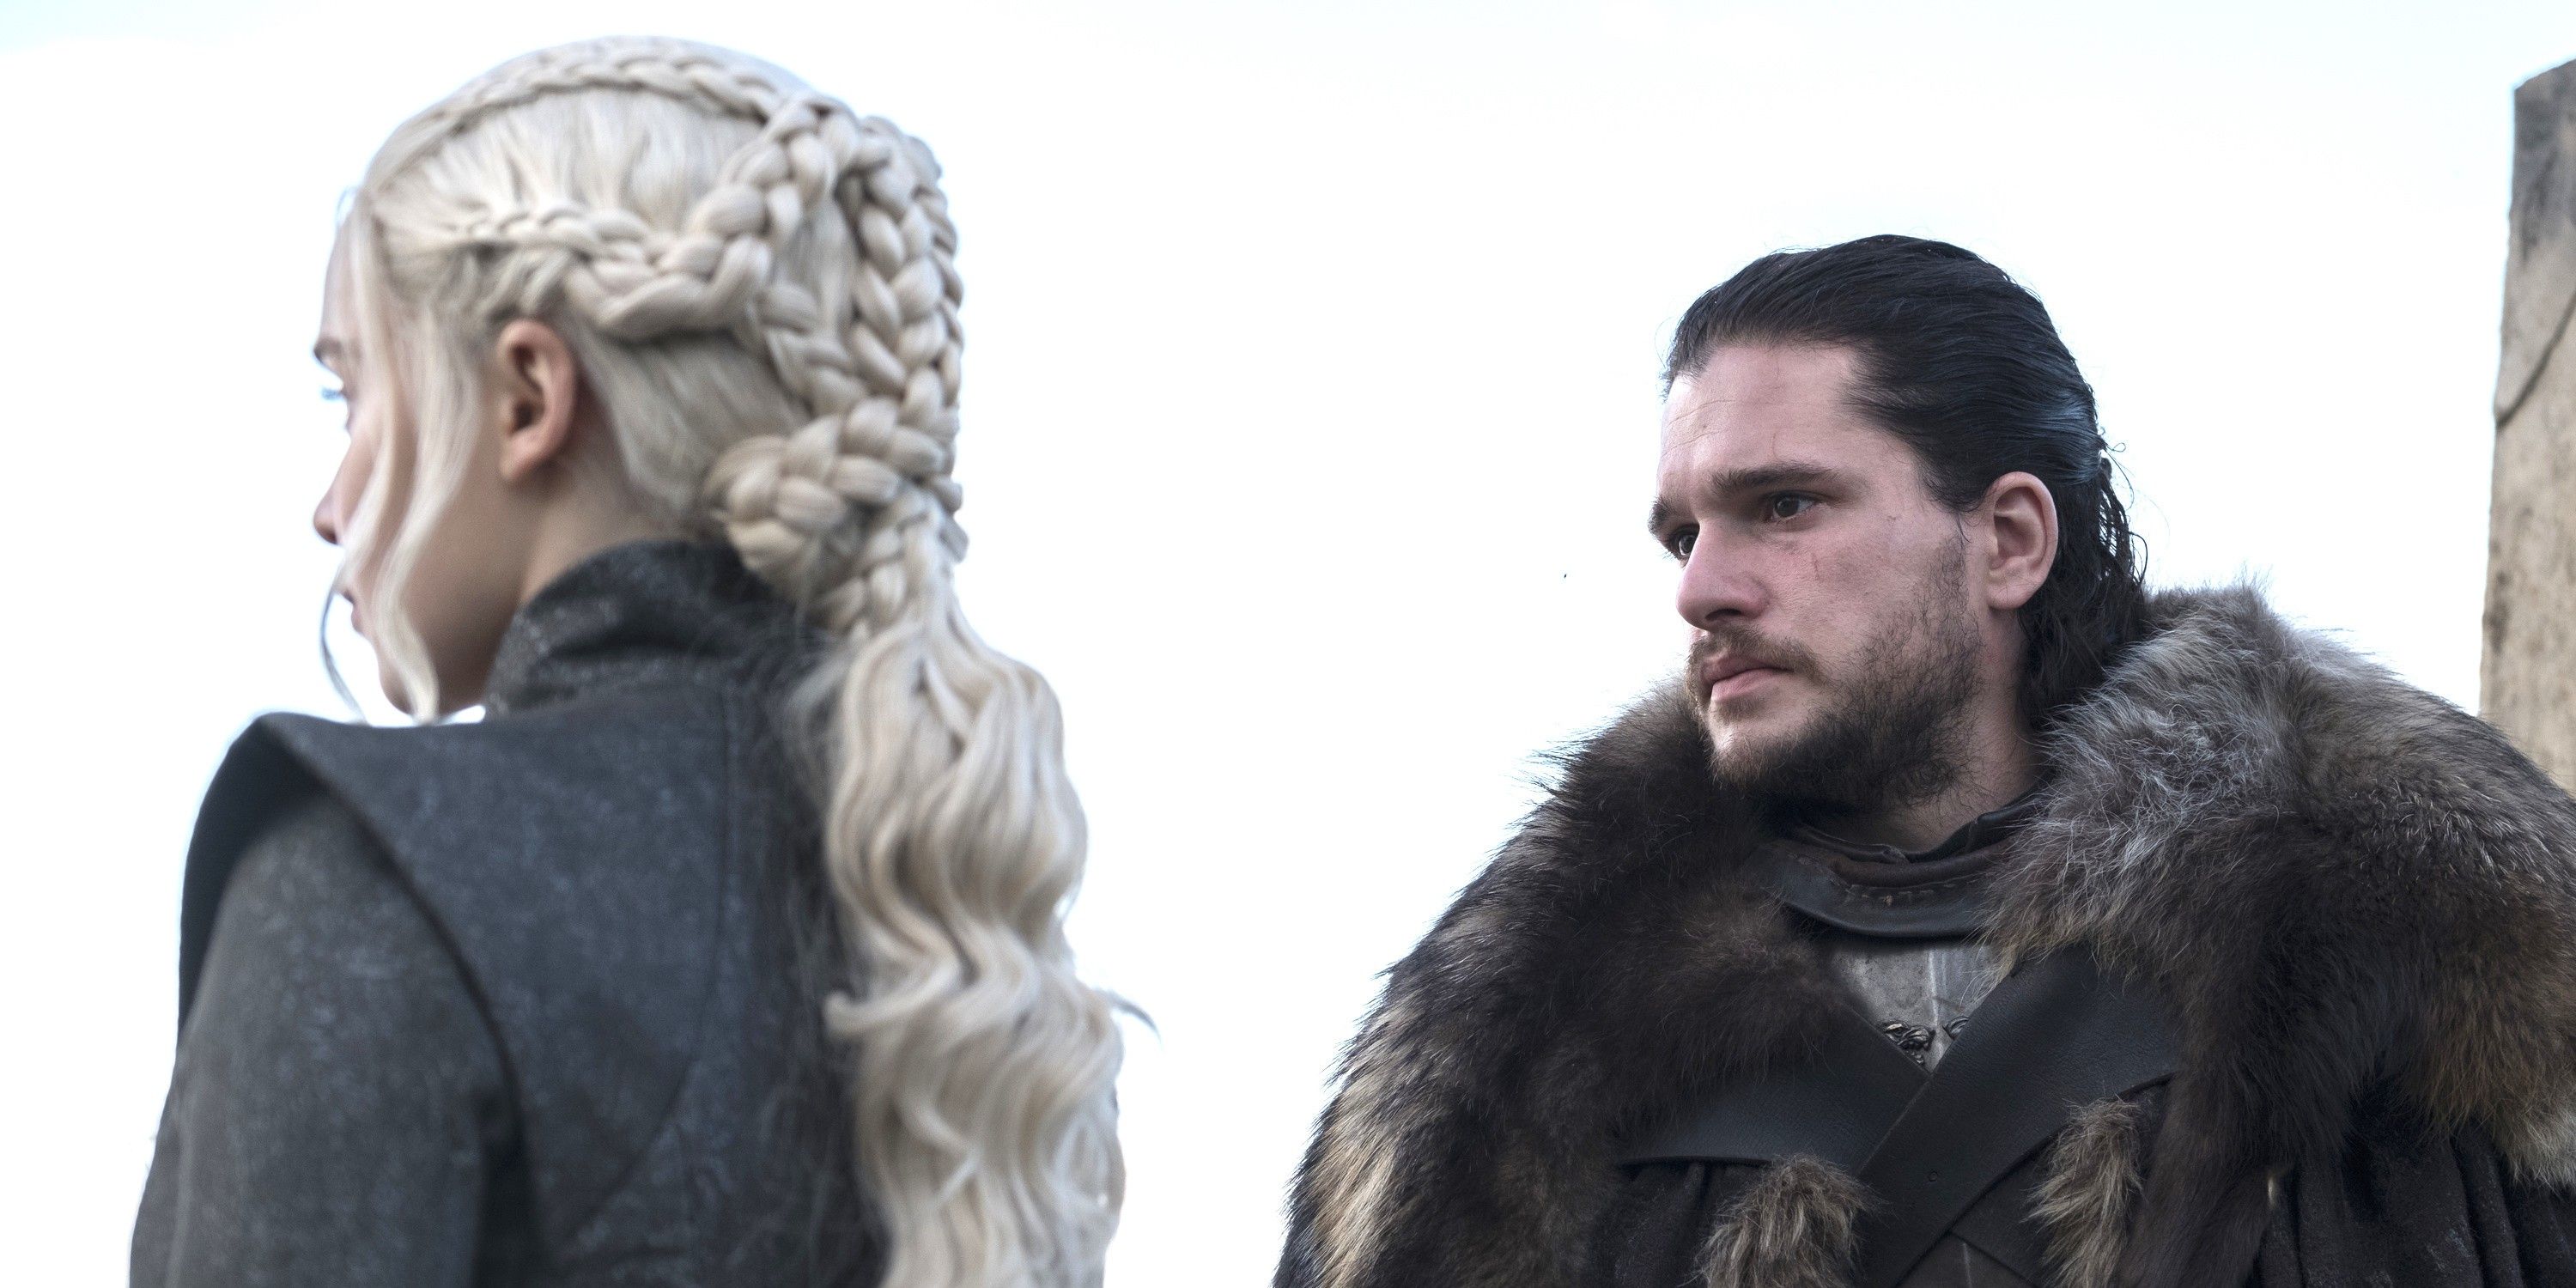 Kit Harrington as Jon Snow and Emilia Clark as Daenerys Targaryen in Game of Thrones